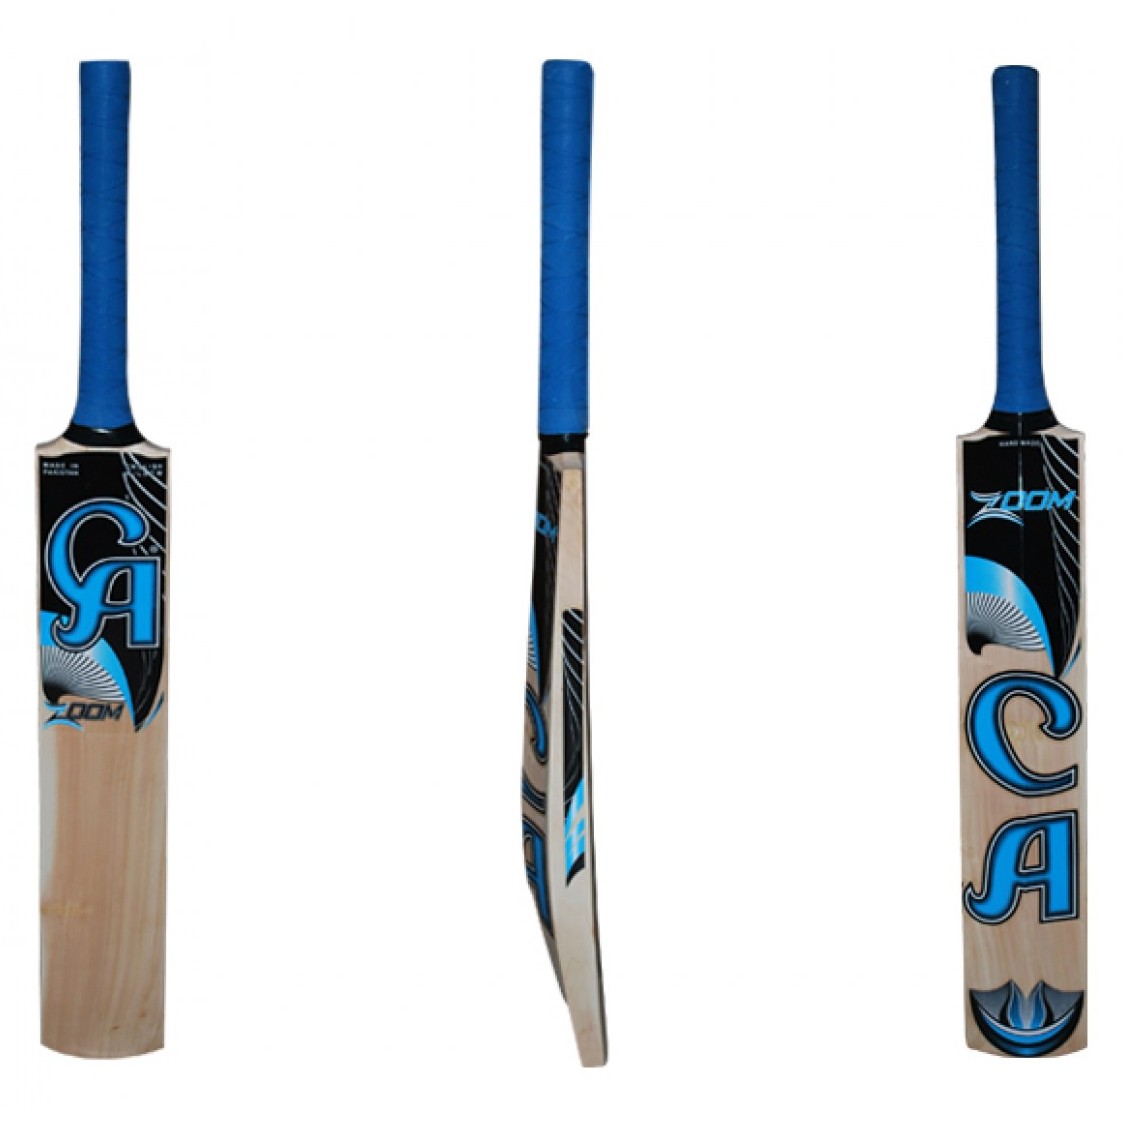 CA Zoom Hard Ball Bat For Cricket - English Willow